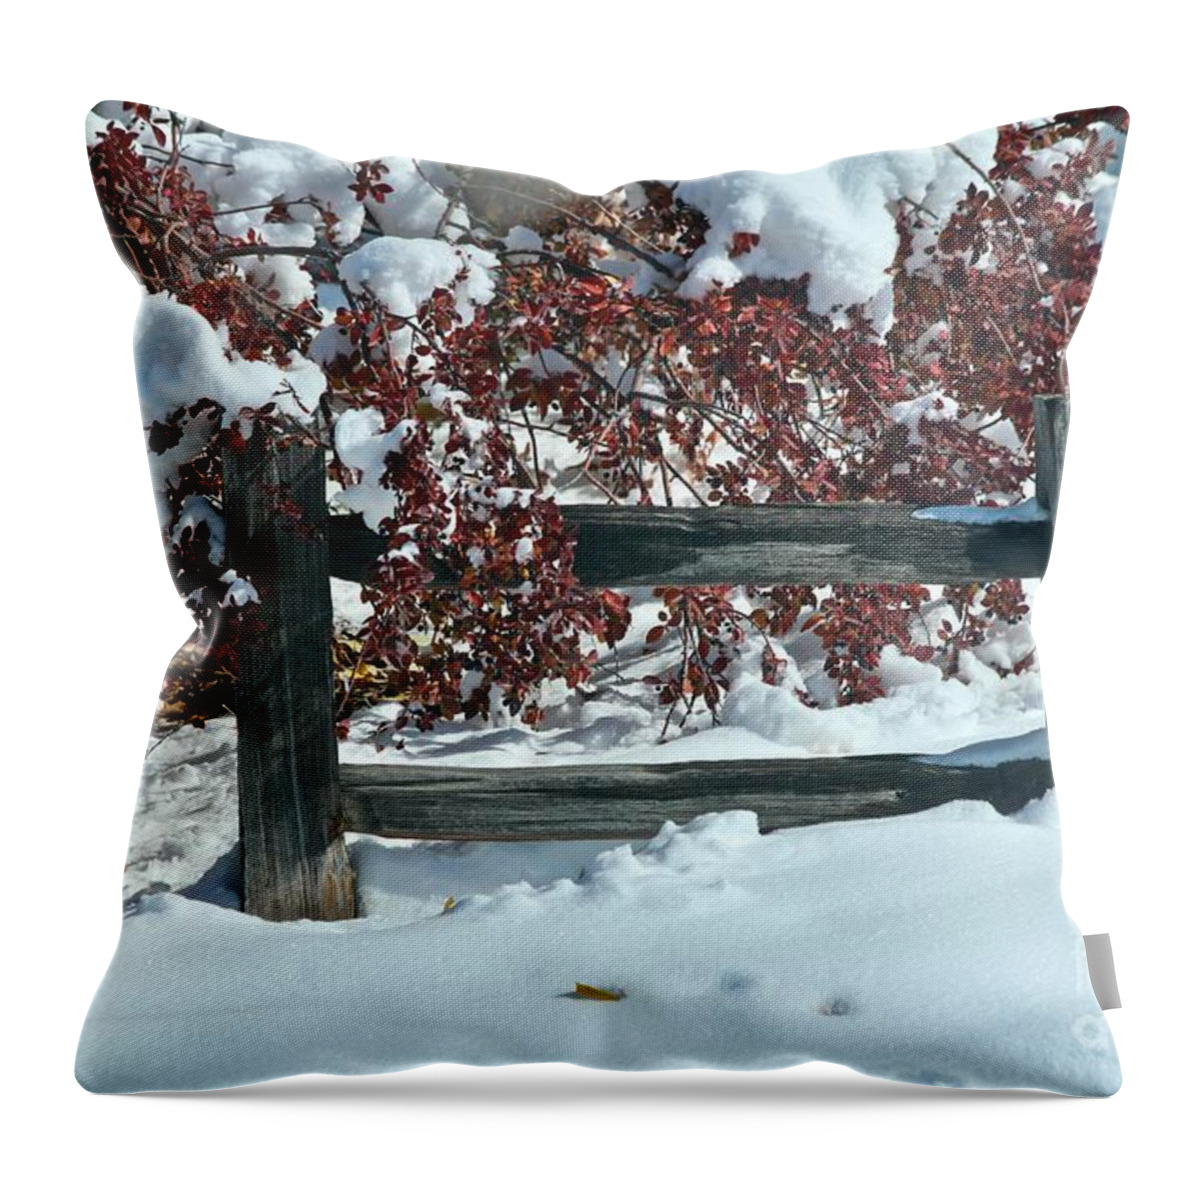 Snow Throw Pillow featuring the photograph Wintery Fall by Ann E Robson